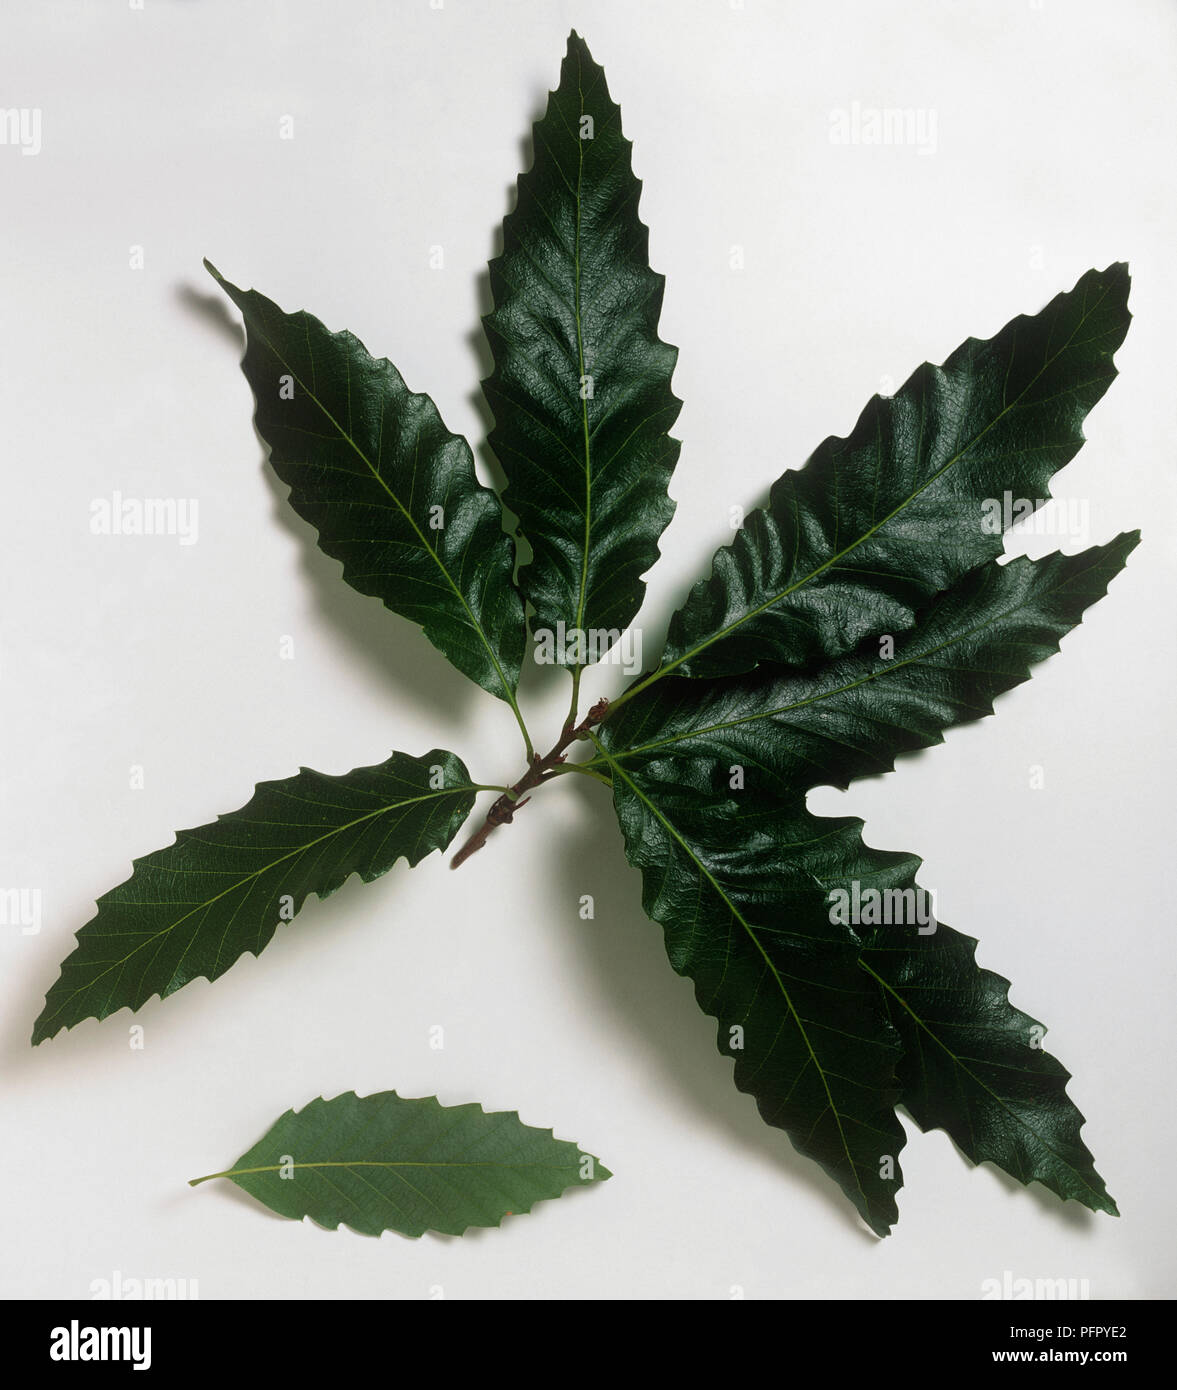 Quercus castaneifolia (Chestnut-leaved oak) slender dark green leaves with triangular lobes on stem cutting, and paler green single leaf Stock Photo